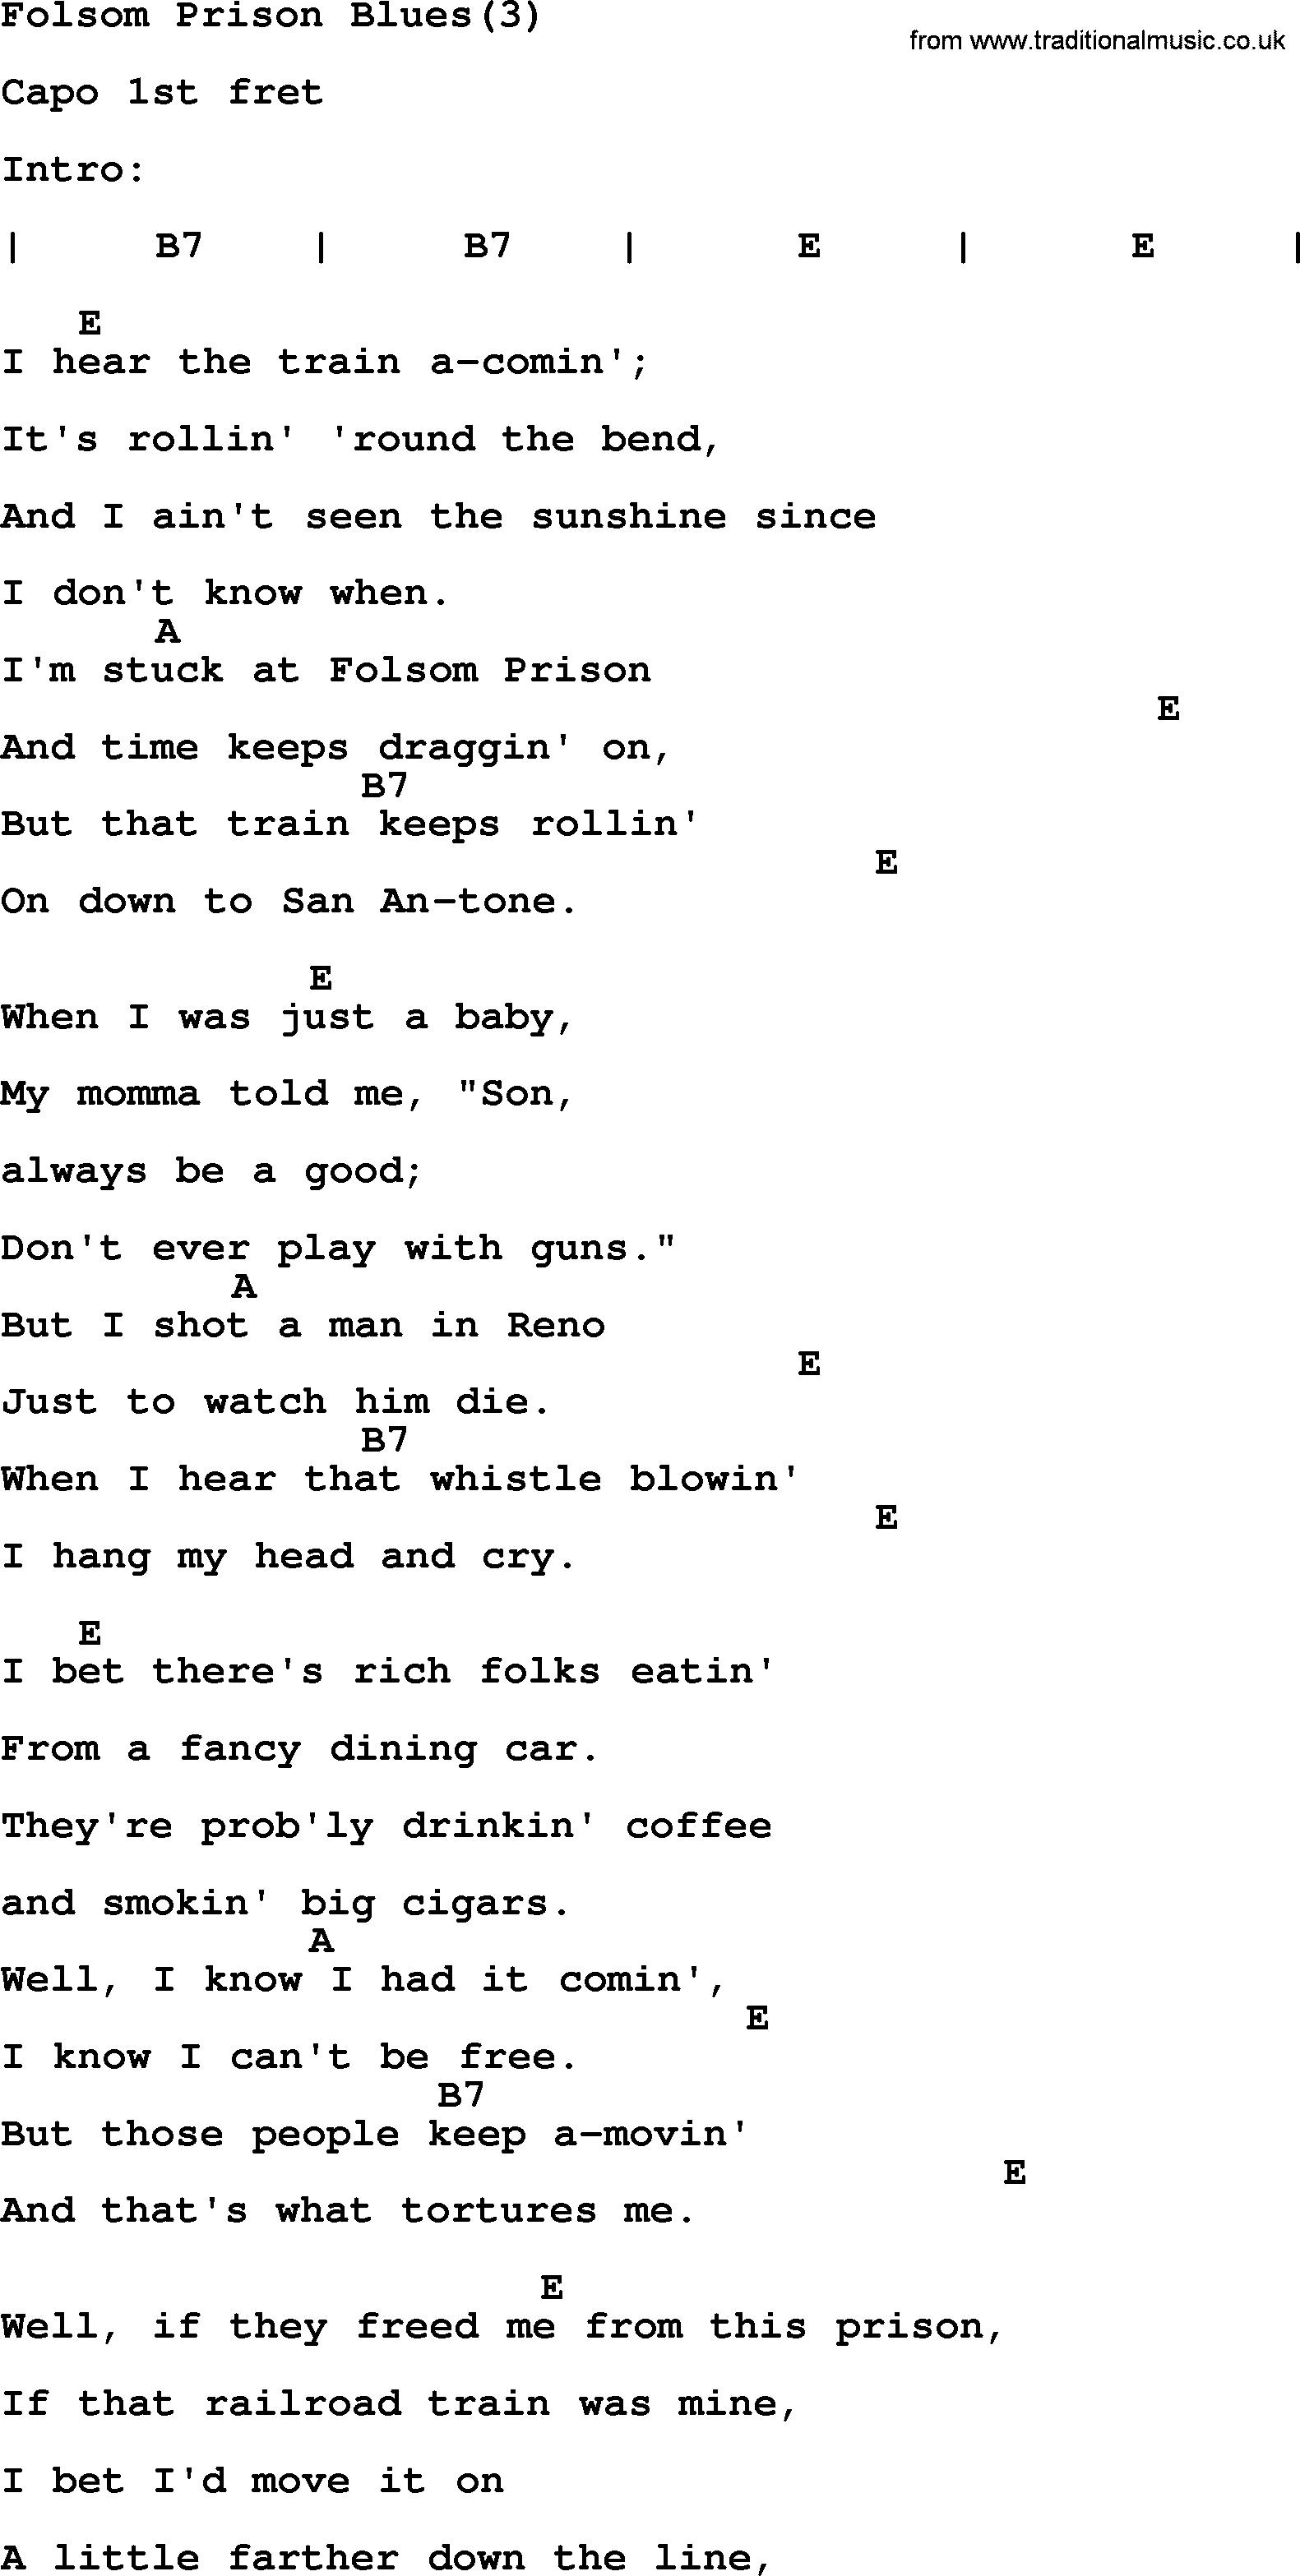 Johnny Cash song Folsom Prison Blues(3), lyrics and chords